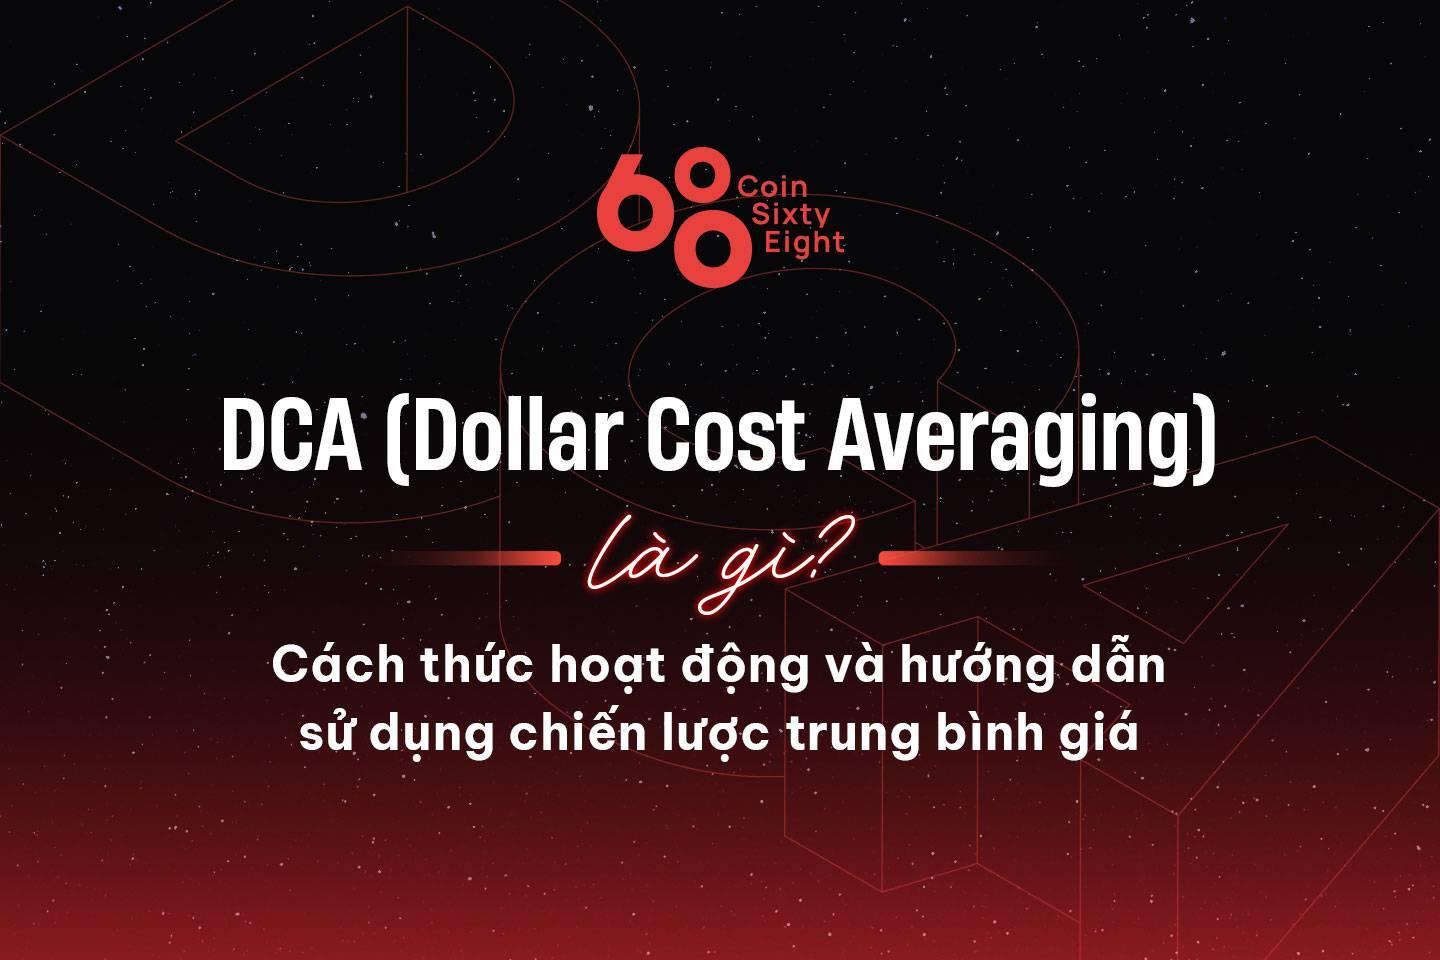 dca-dollar-cost-averaging-la-gi-cach-thuc-hoat-dong-va-huong-dan-su-dung-chien-luoc-trung-binh-gia